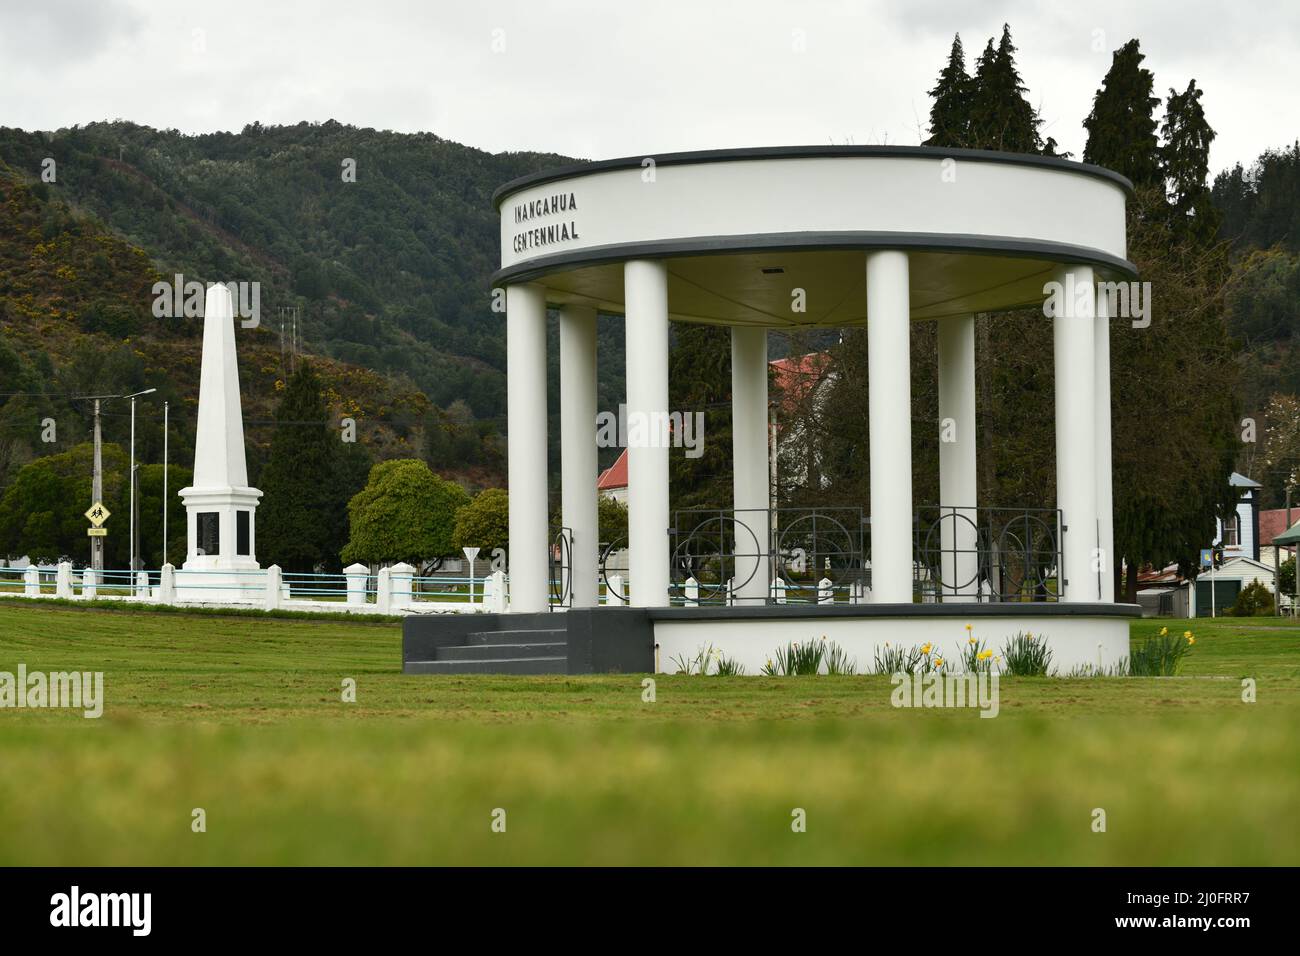 REEFTON, NEUSEELAND, 6. SEPTEMBER 2021: Die historische Band Rotunda and war Memorial in Reefton, Neuseeland, 6. September 2021 Stockfoto